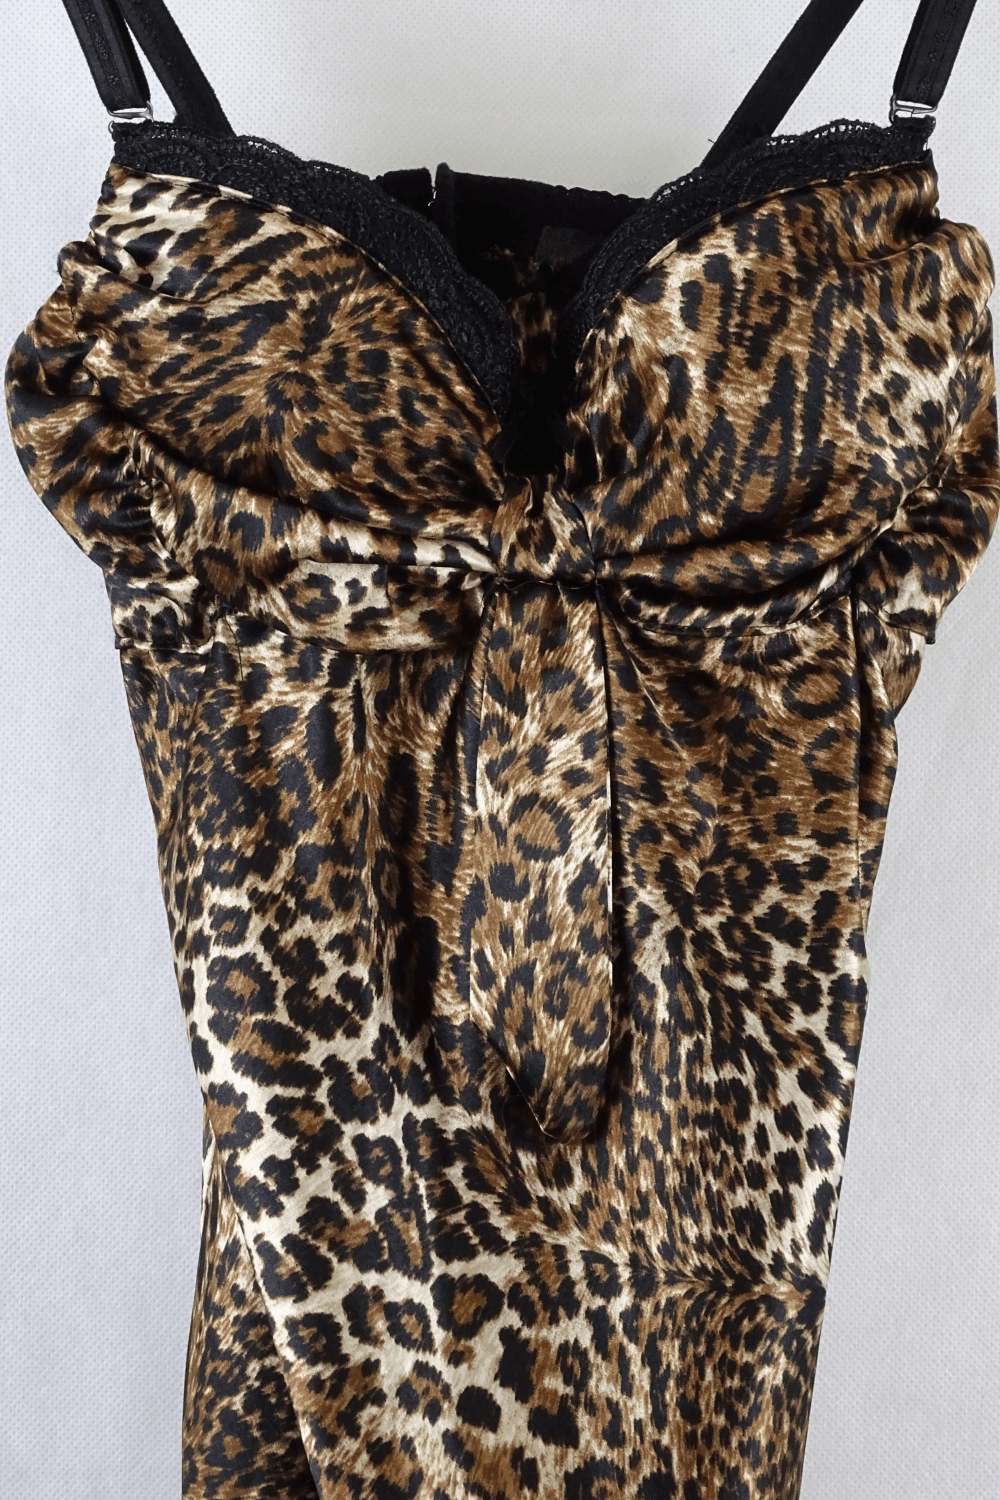 Fifilles Leopard Print Dress S